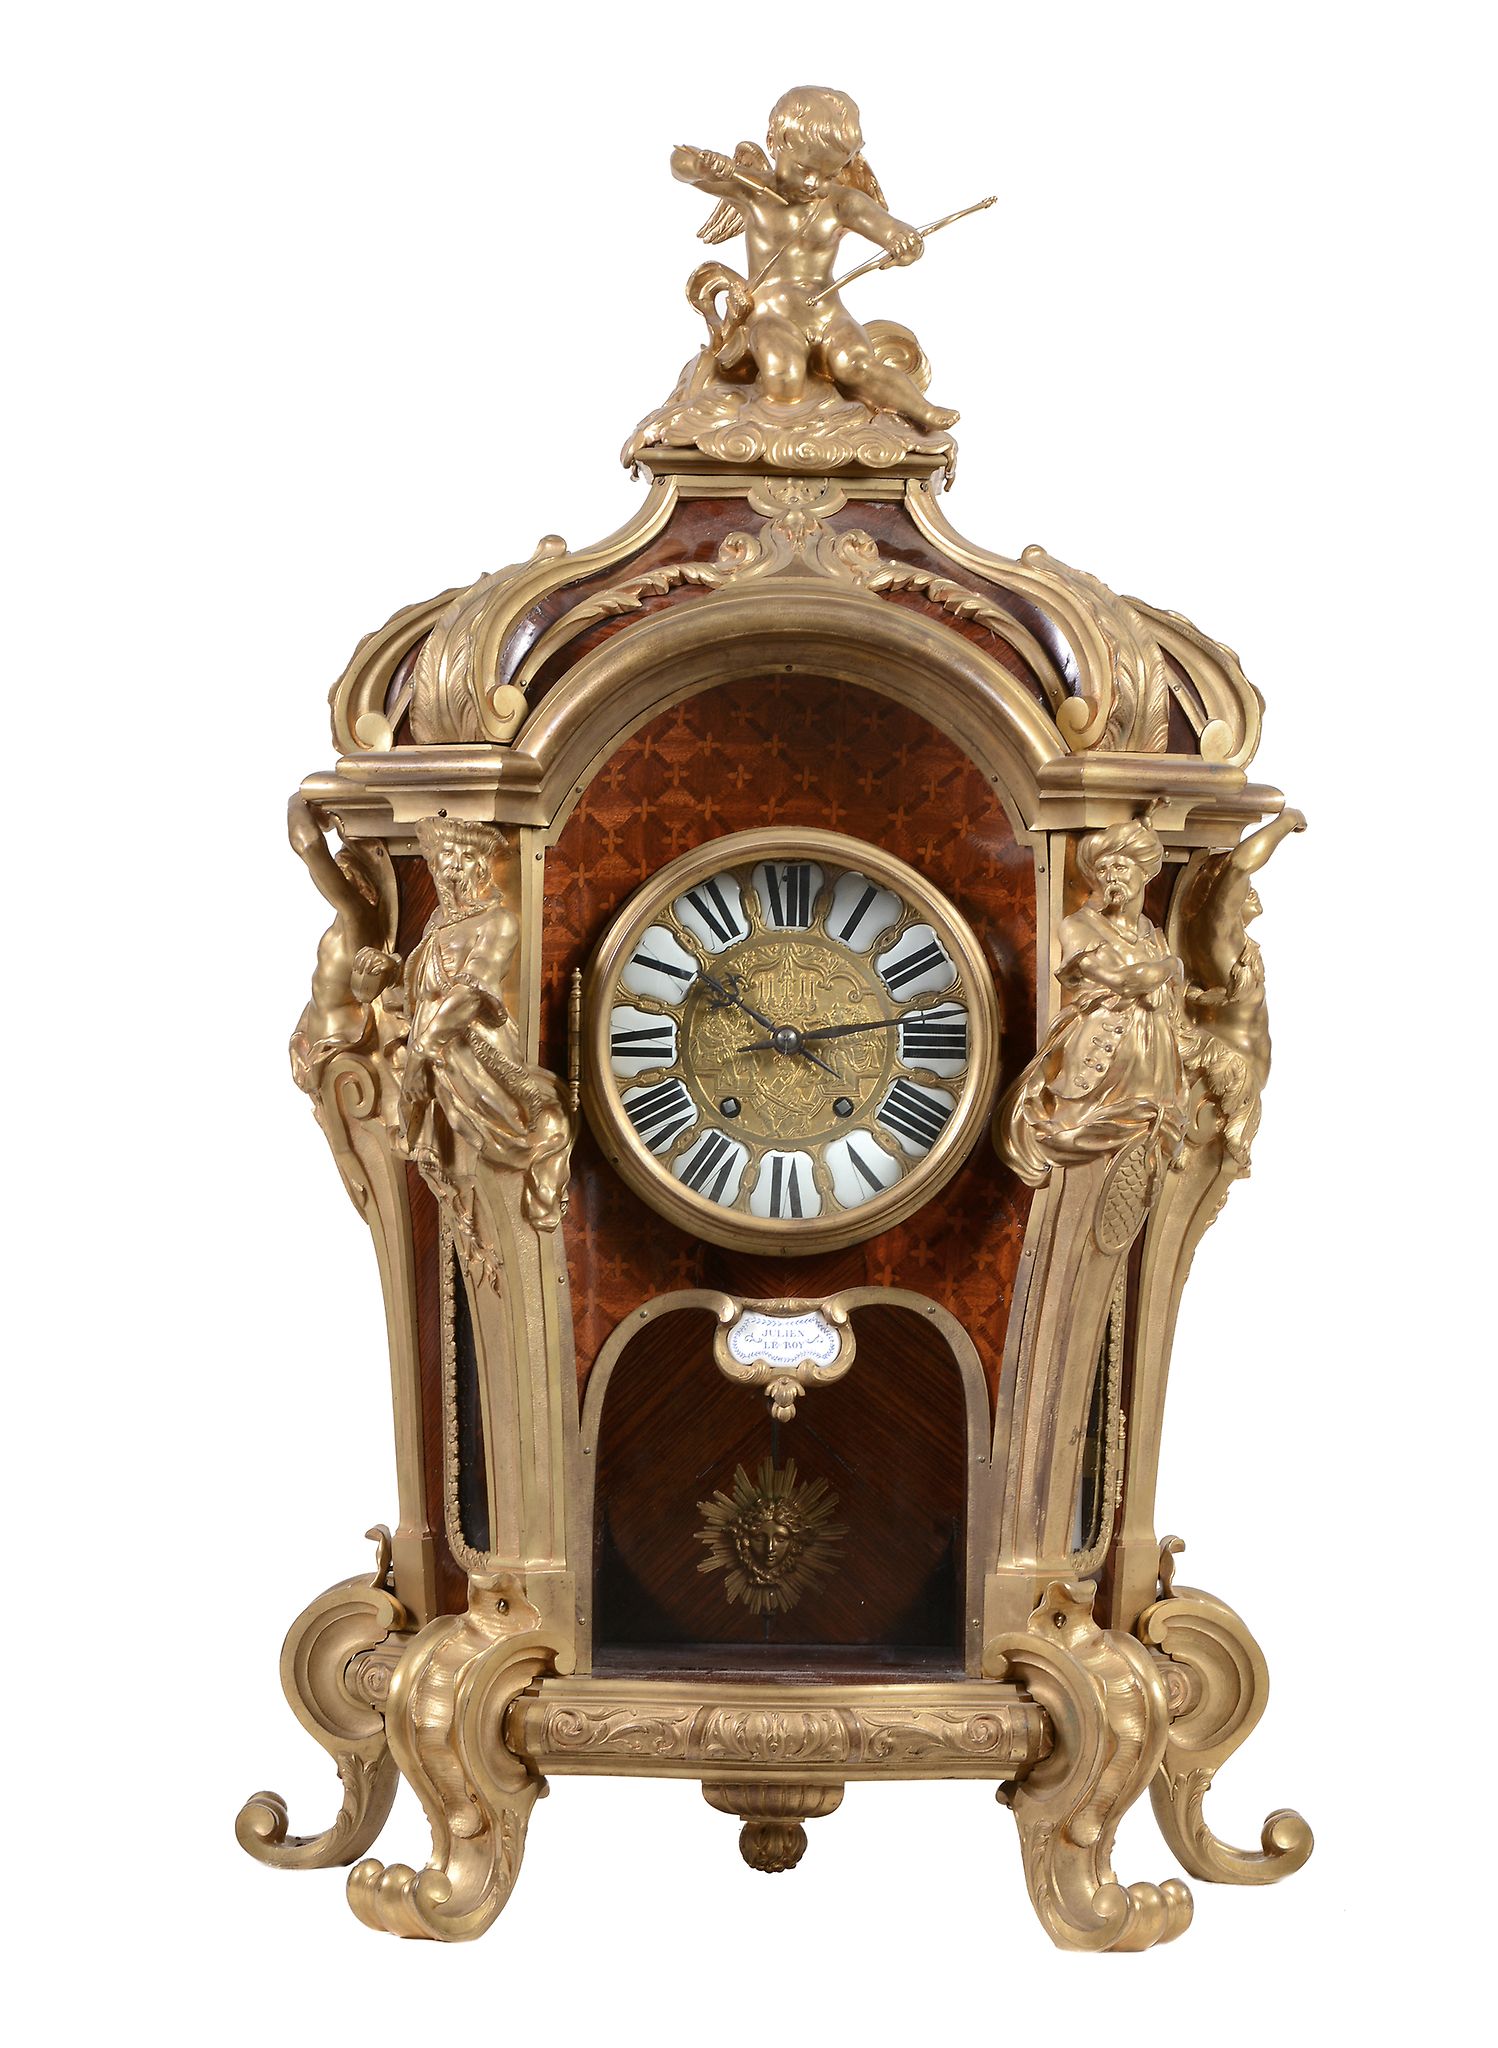 An impressive French Louis XV style ormolu mounted kingwood pedestal clock... - Image 2 of 4